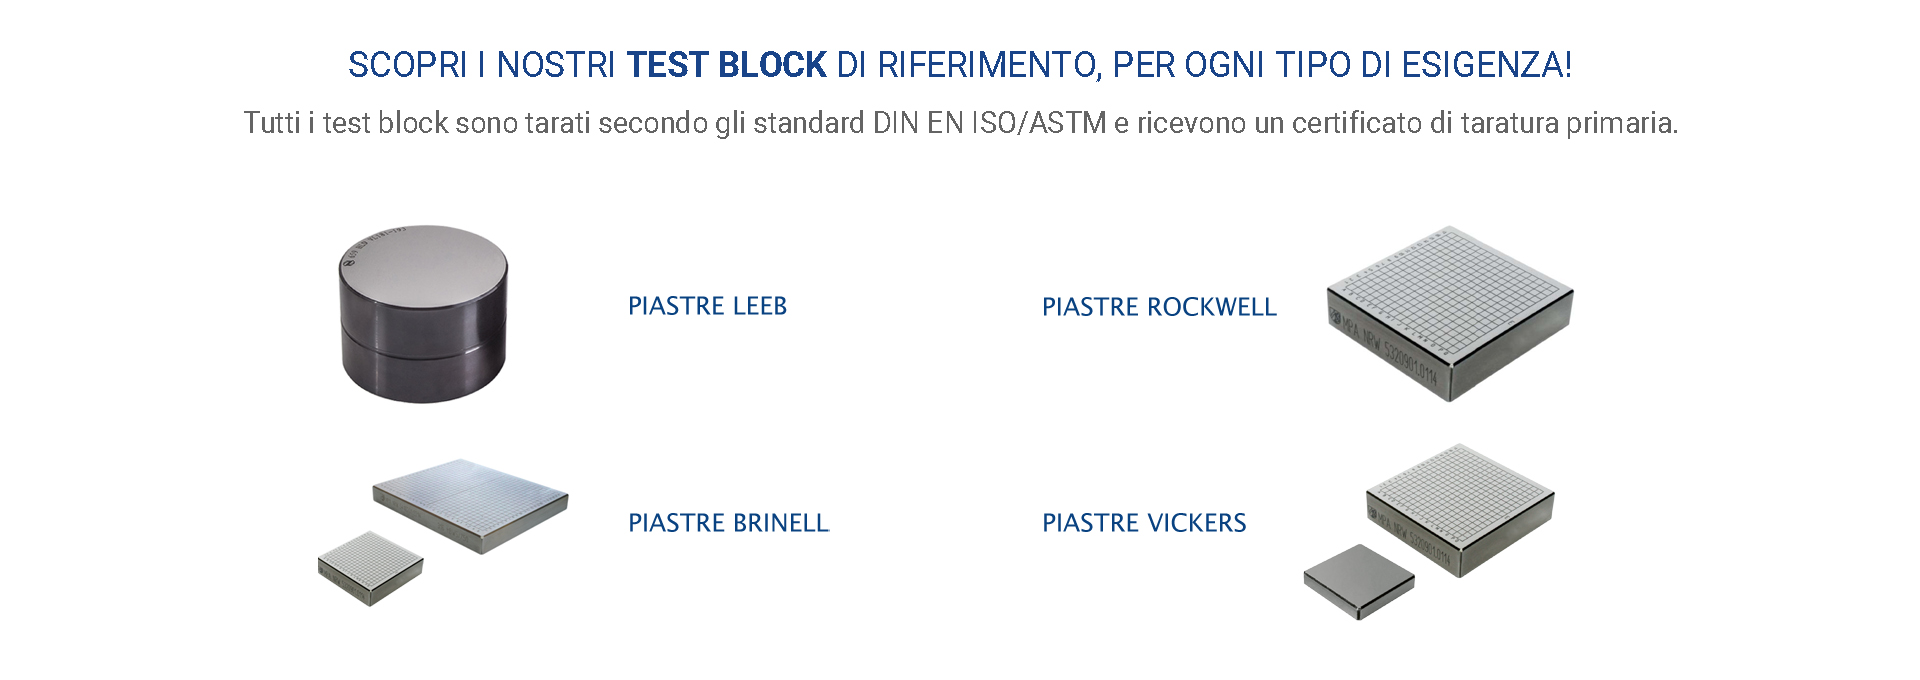 Test block